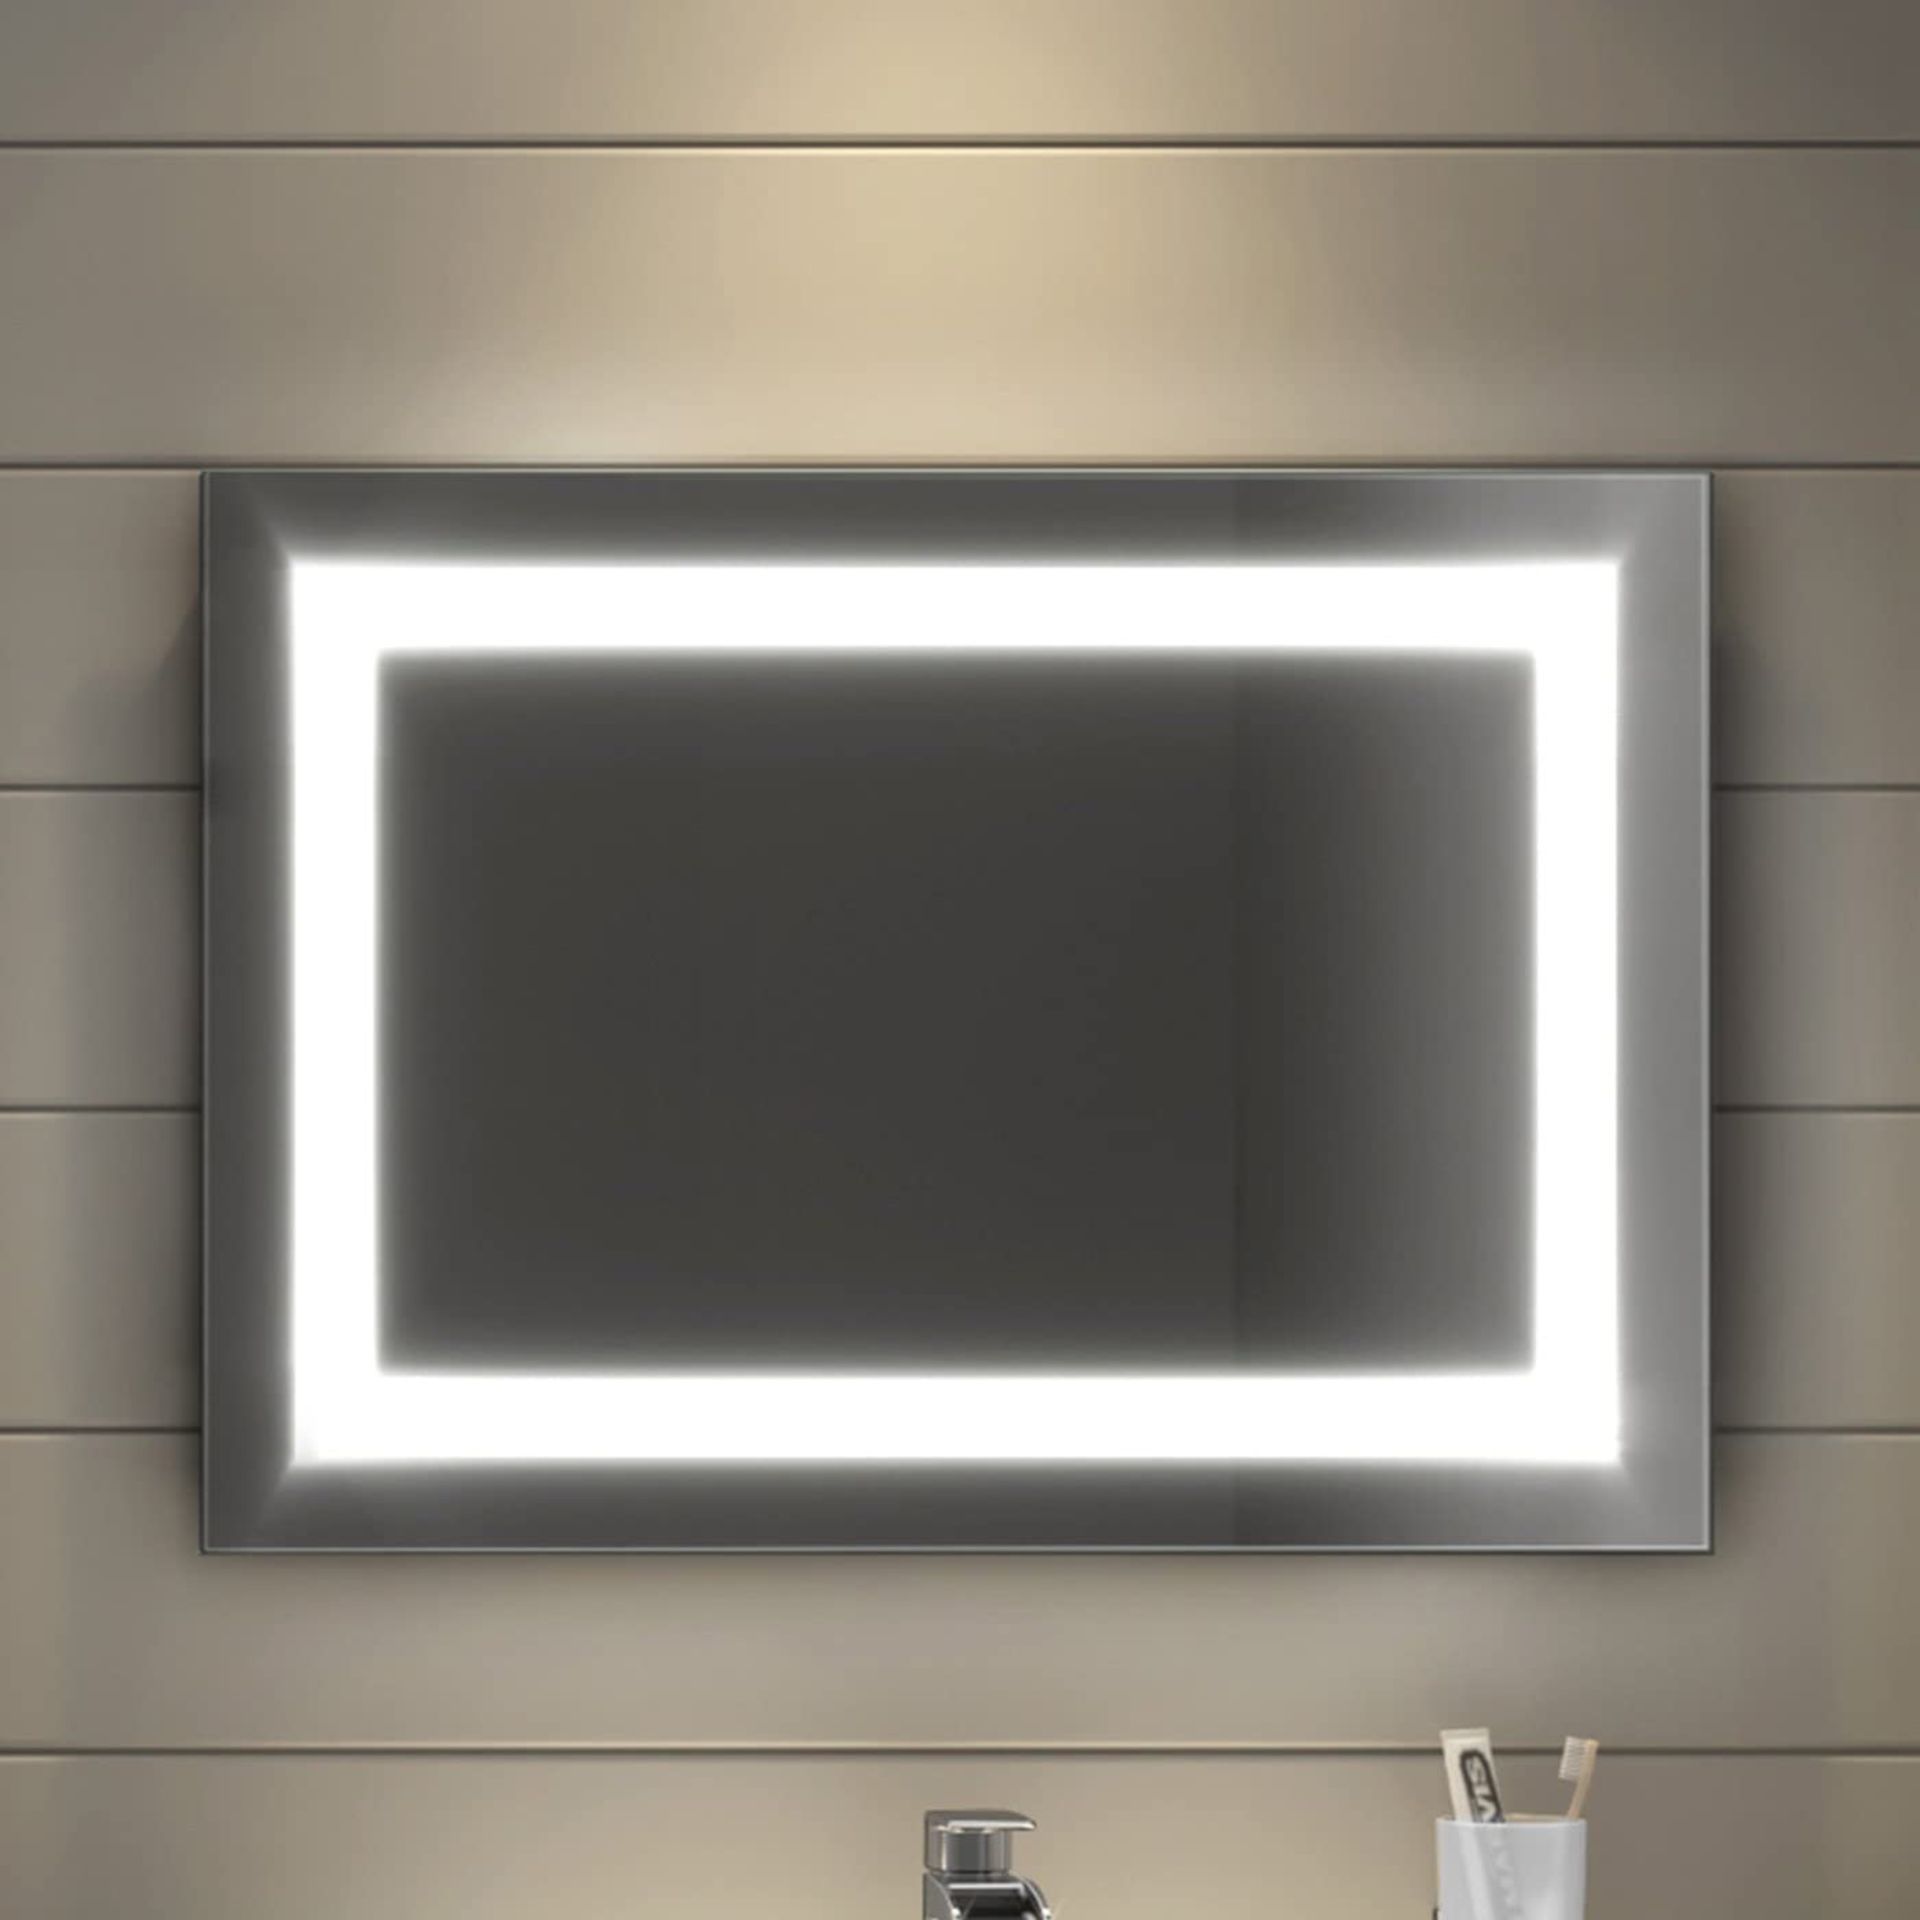 New & Boxed 500x700mm Modern Illuminated Backlit Led Light Bathroom Mirror + Demister Pad. RRP ... - Image 2 of 3